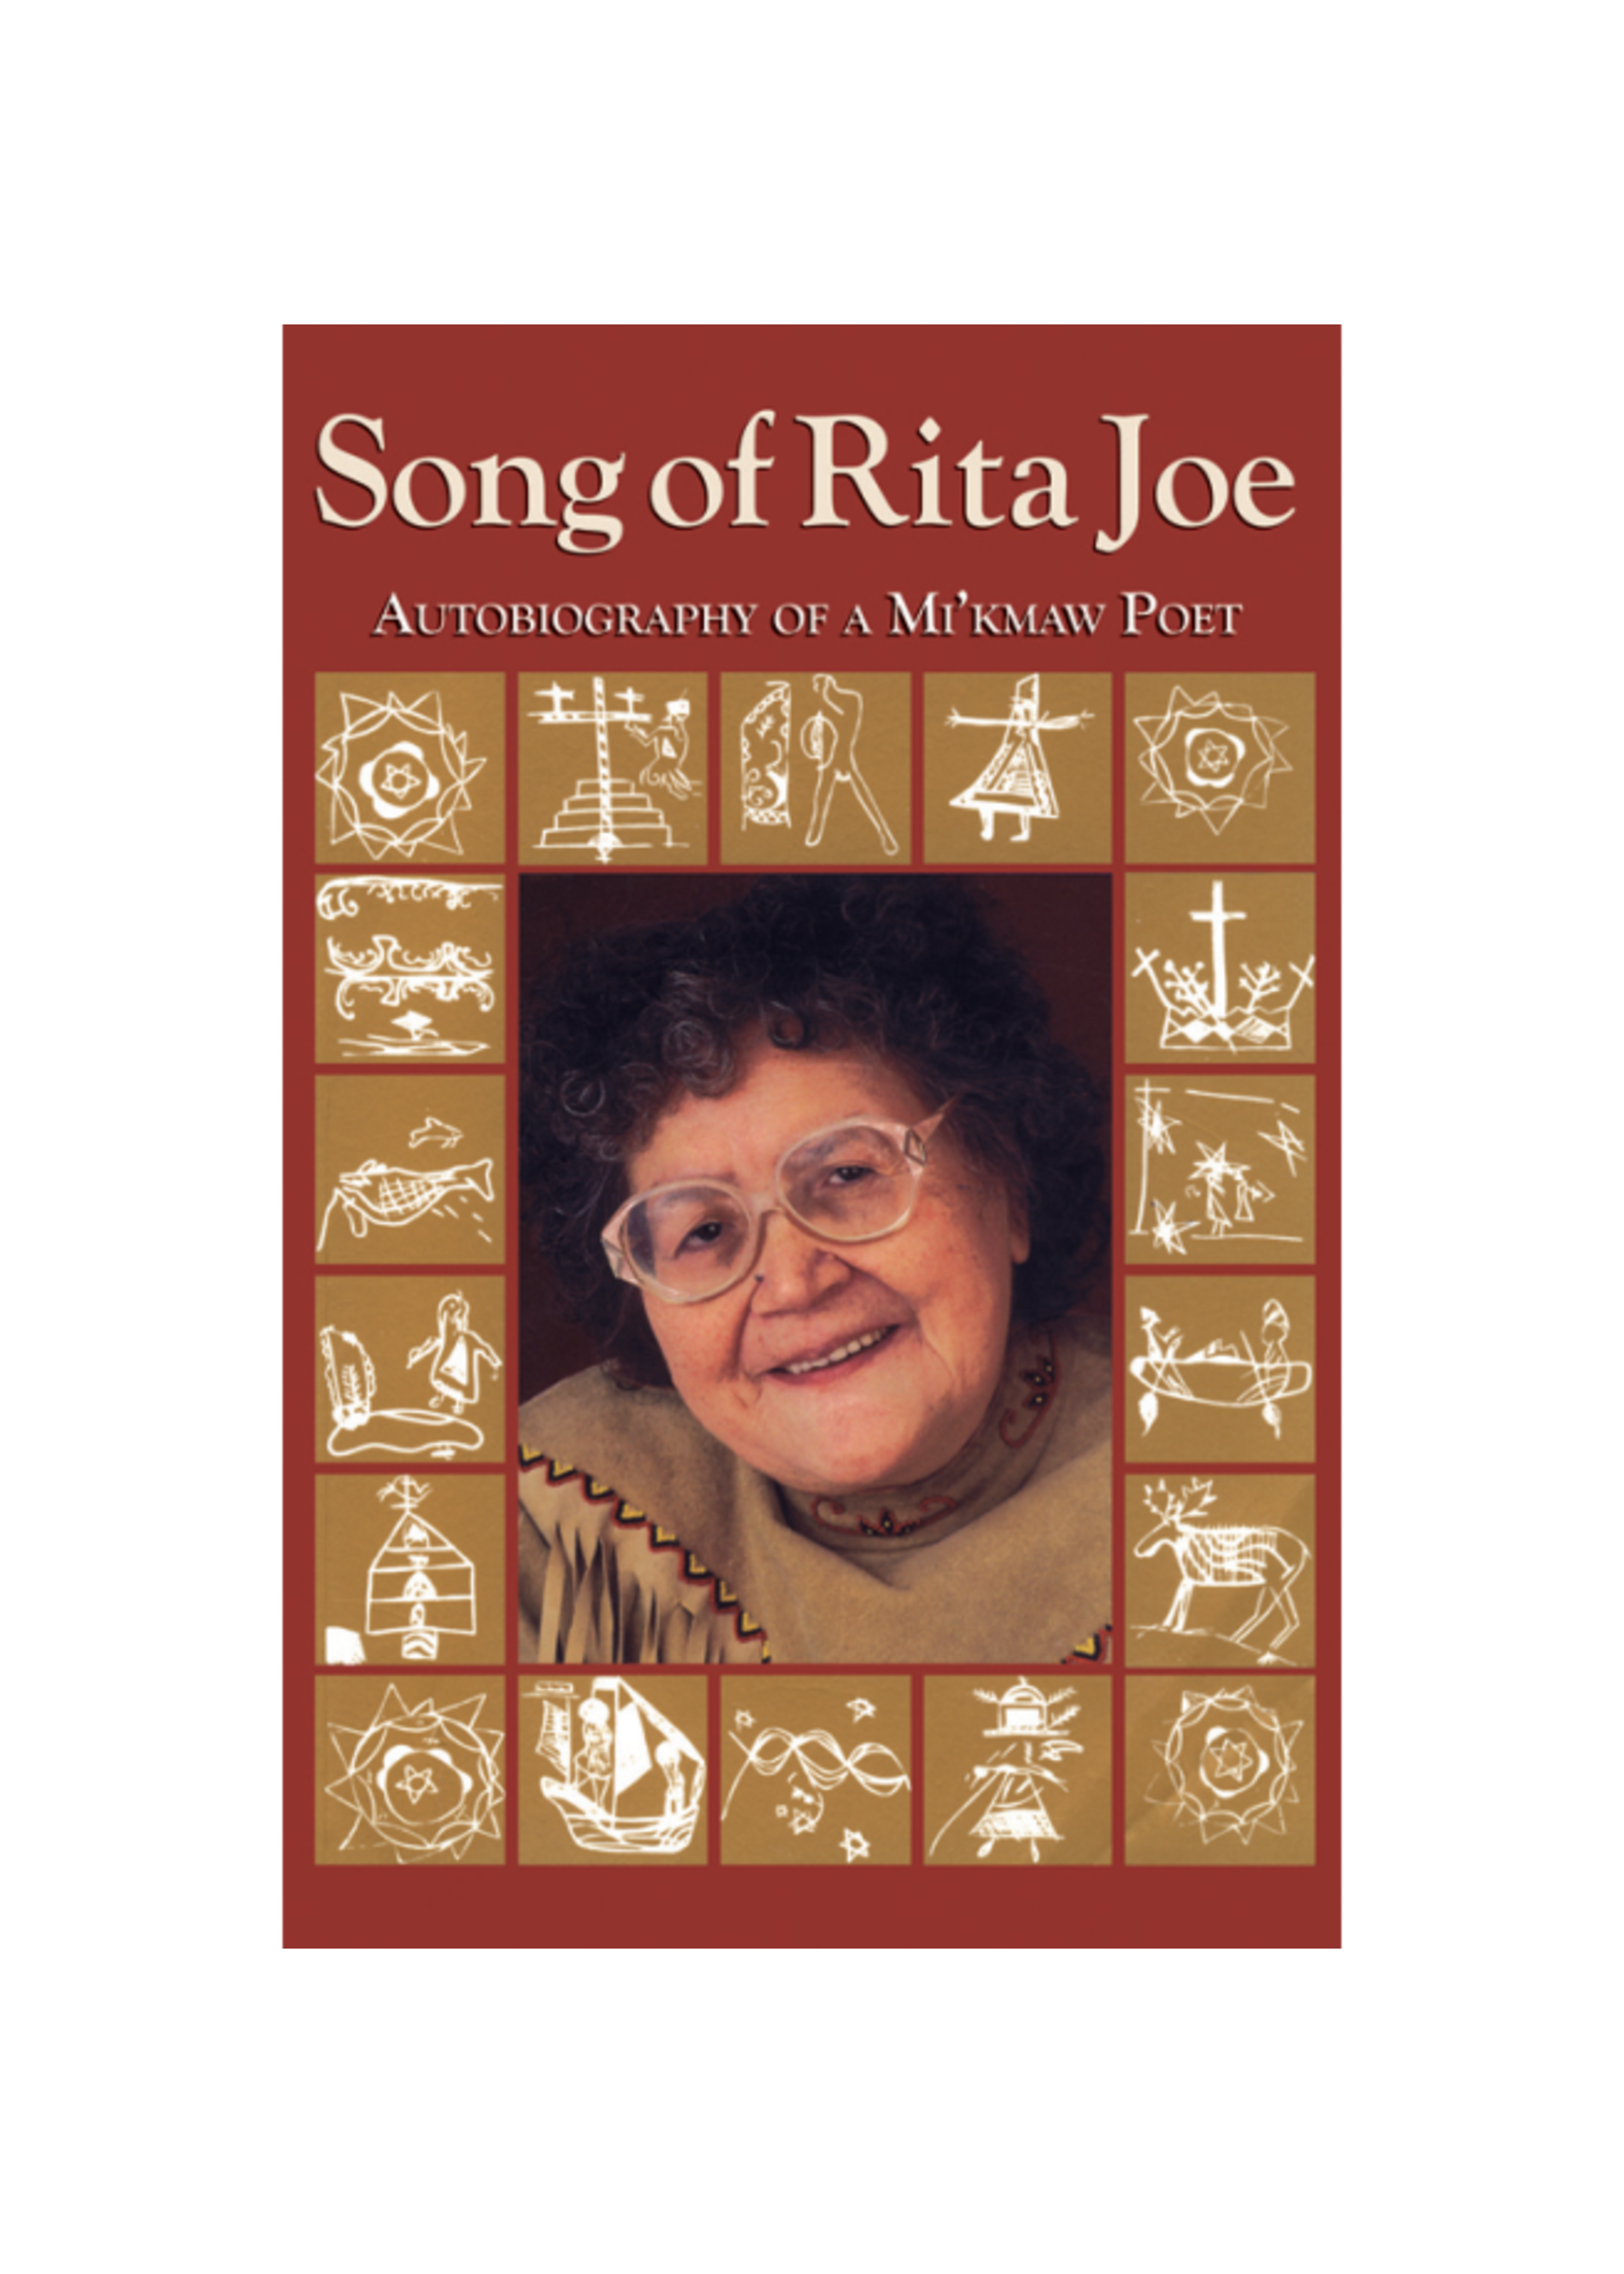 Song of Rita Joe: Autobiography of a Mi'kmaw Poet by Rita Joe